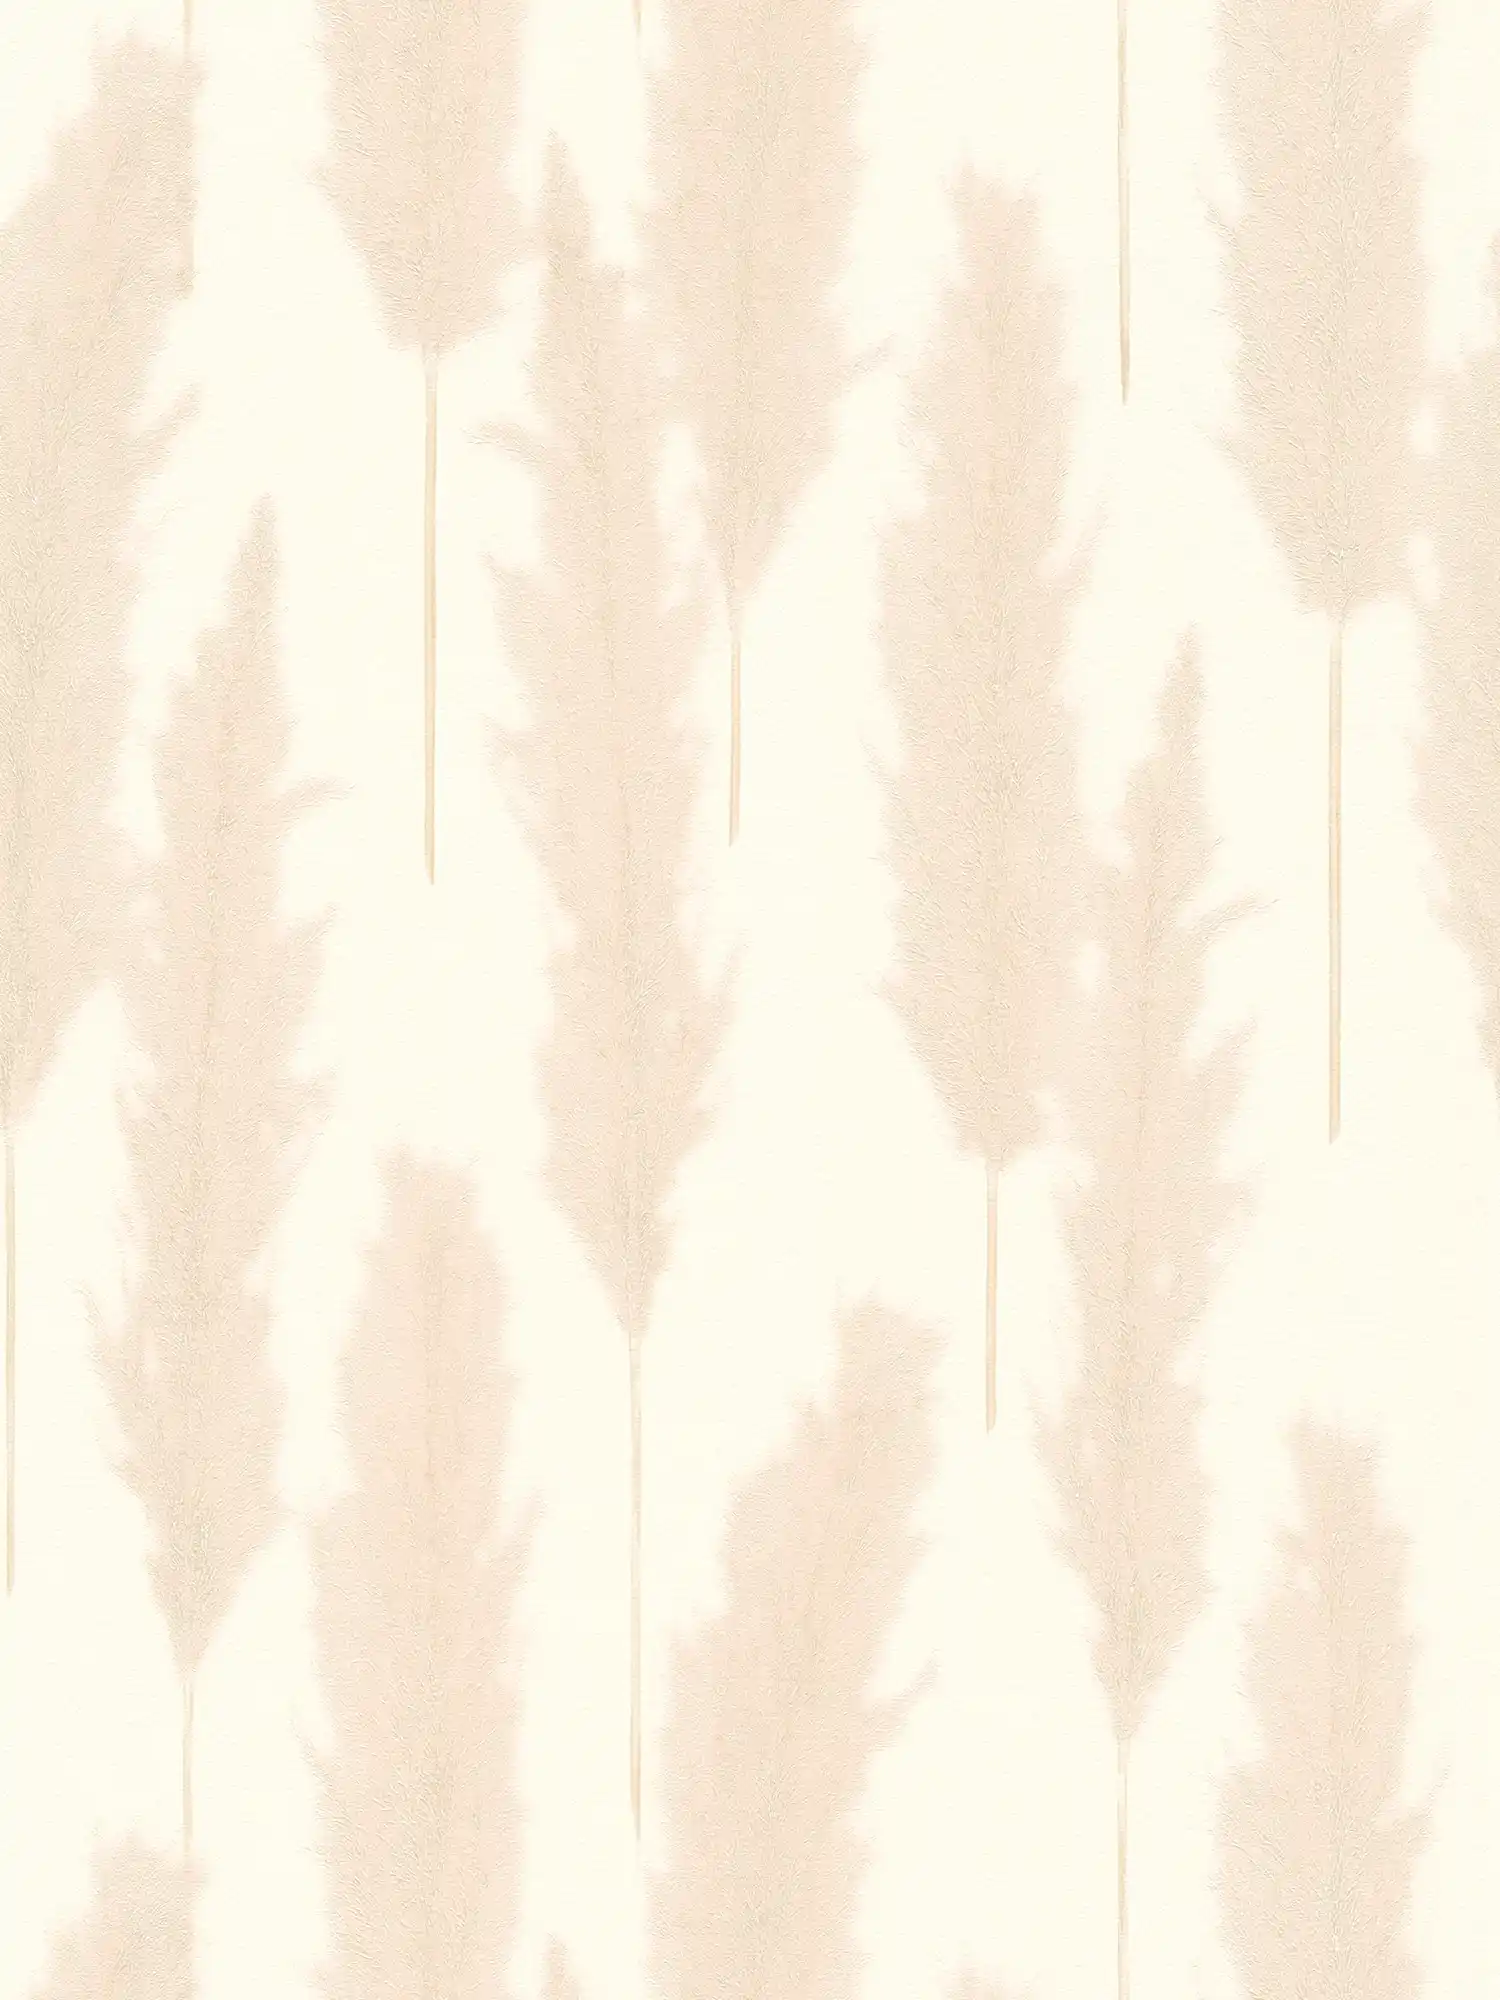 Lampbush Grass Behangdesign - Beige, Crème
